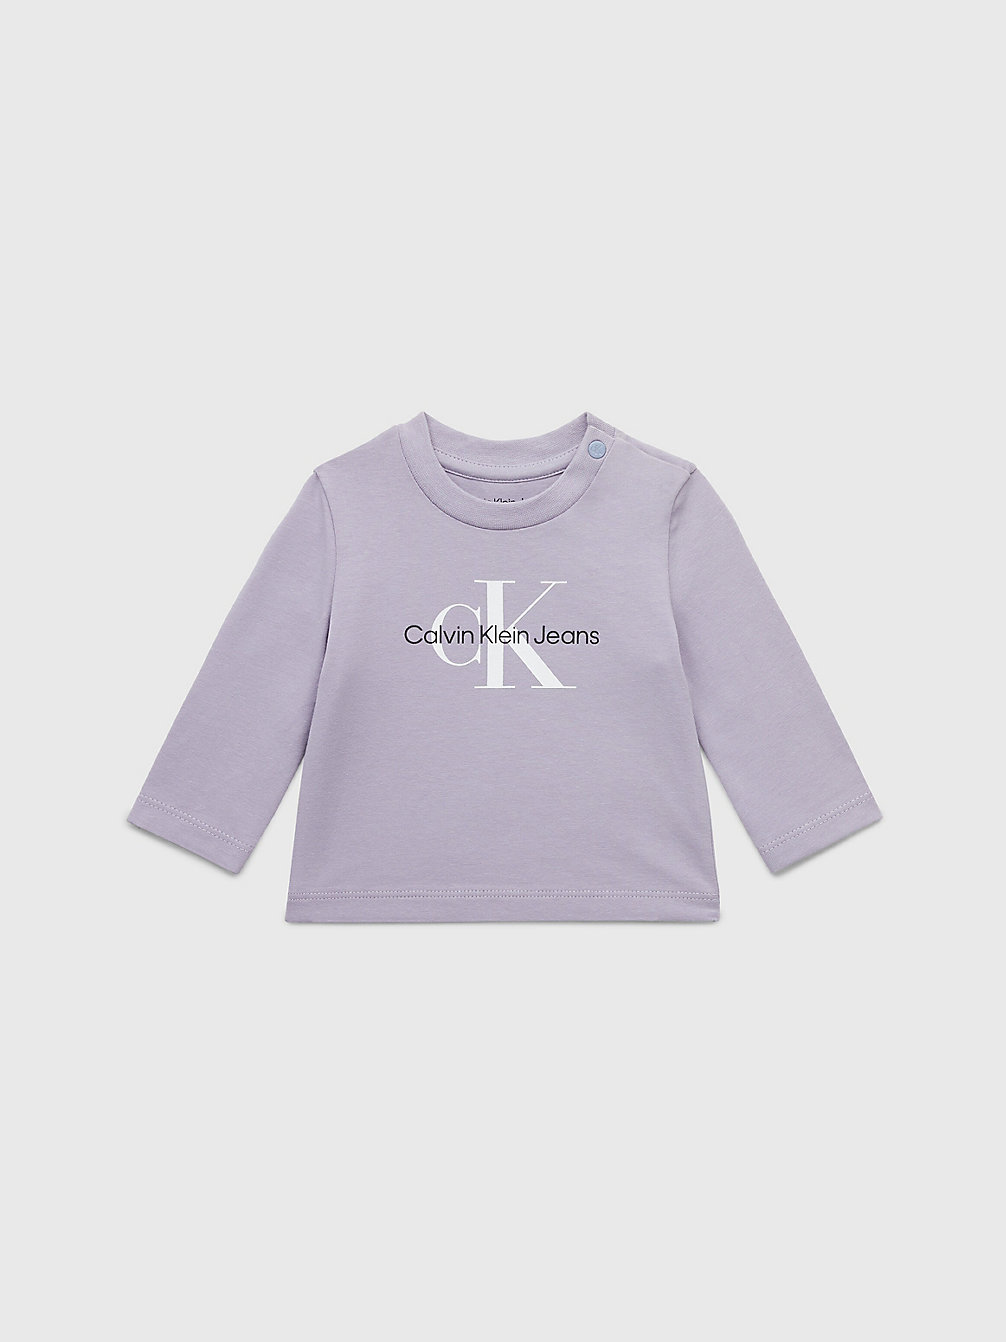 T-Shirt A Maniche Lunghe Per Neonato > SMOKY LILAC > undefined newborn > Calvin Klein